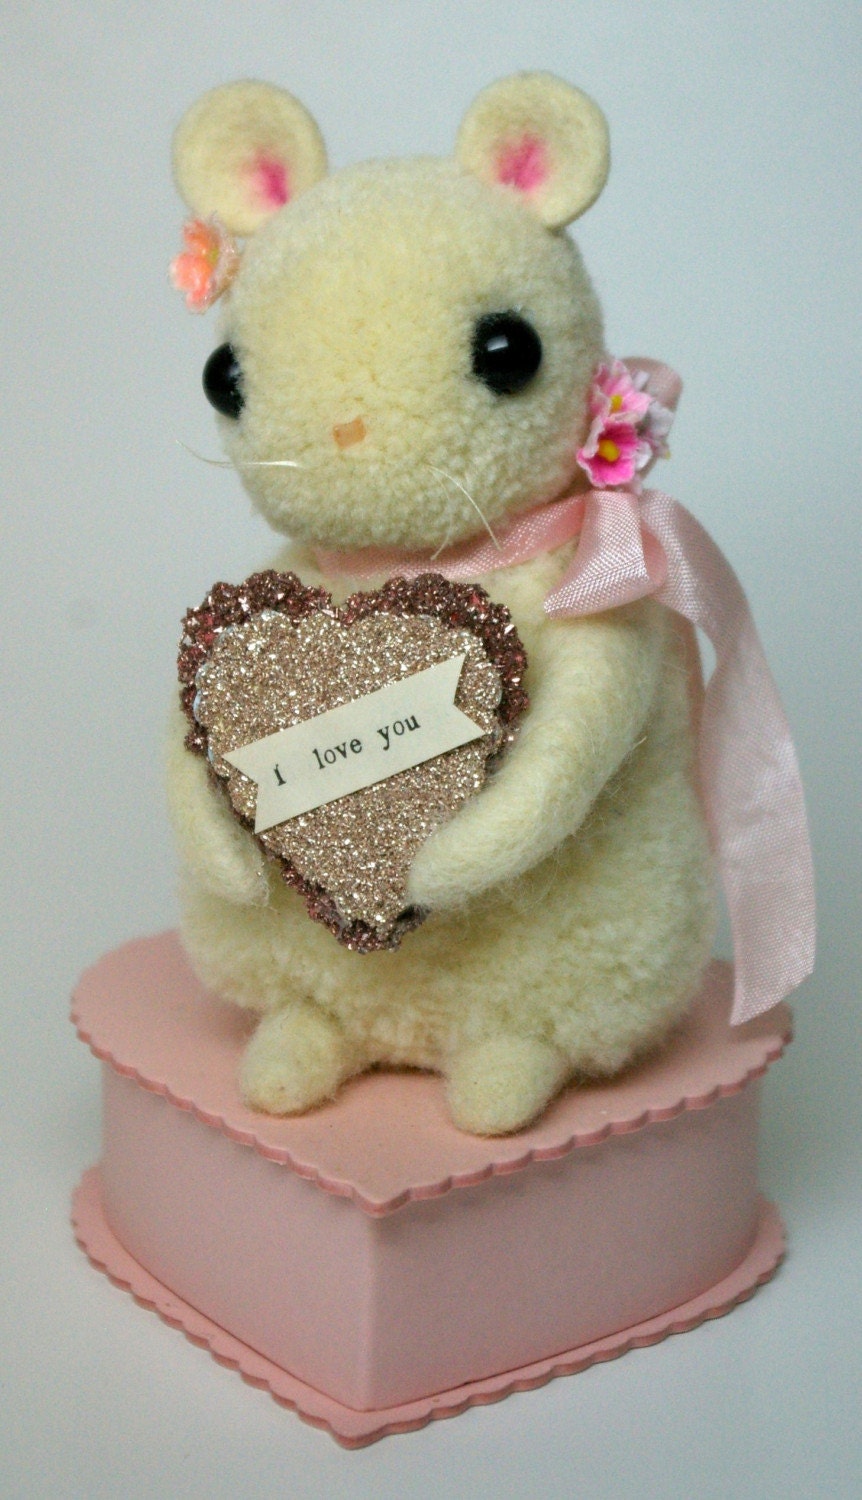 Baby Sugar Mouse - I Love You - Keepsake Box Valentine's Day